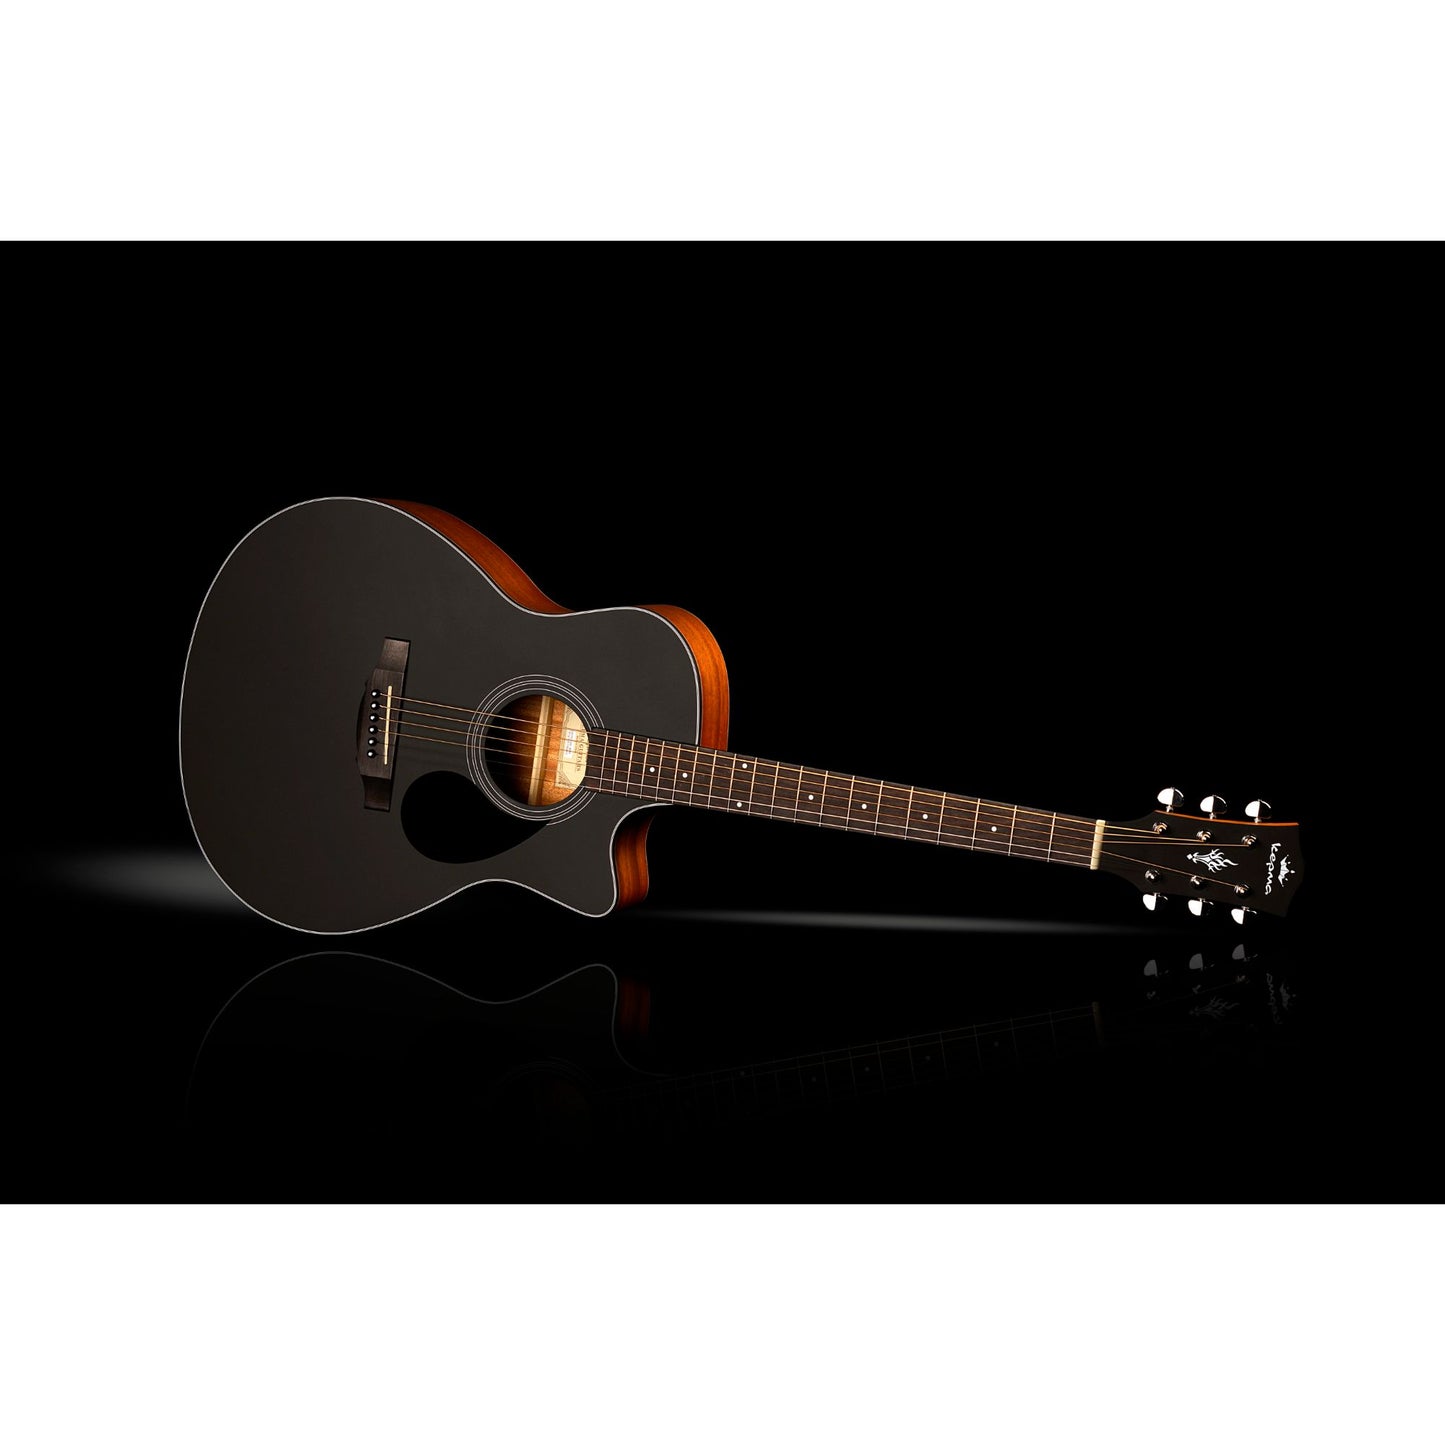 Kepma EAC Acoustic Guitar - Black Matt